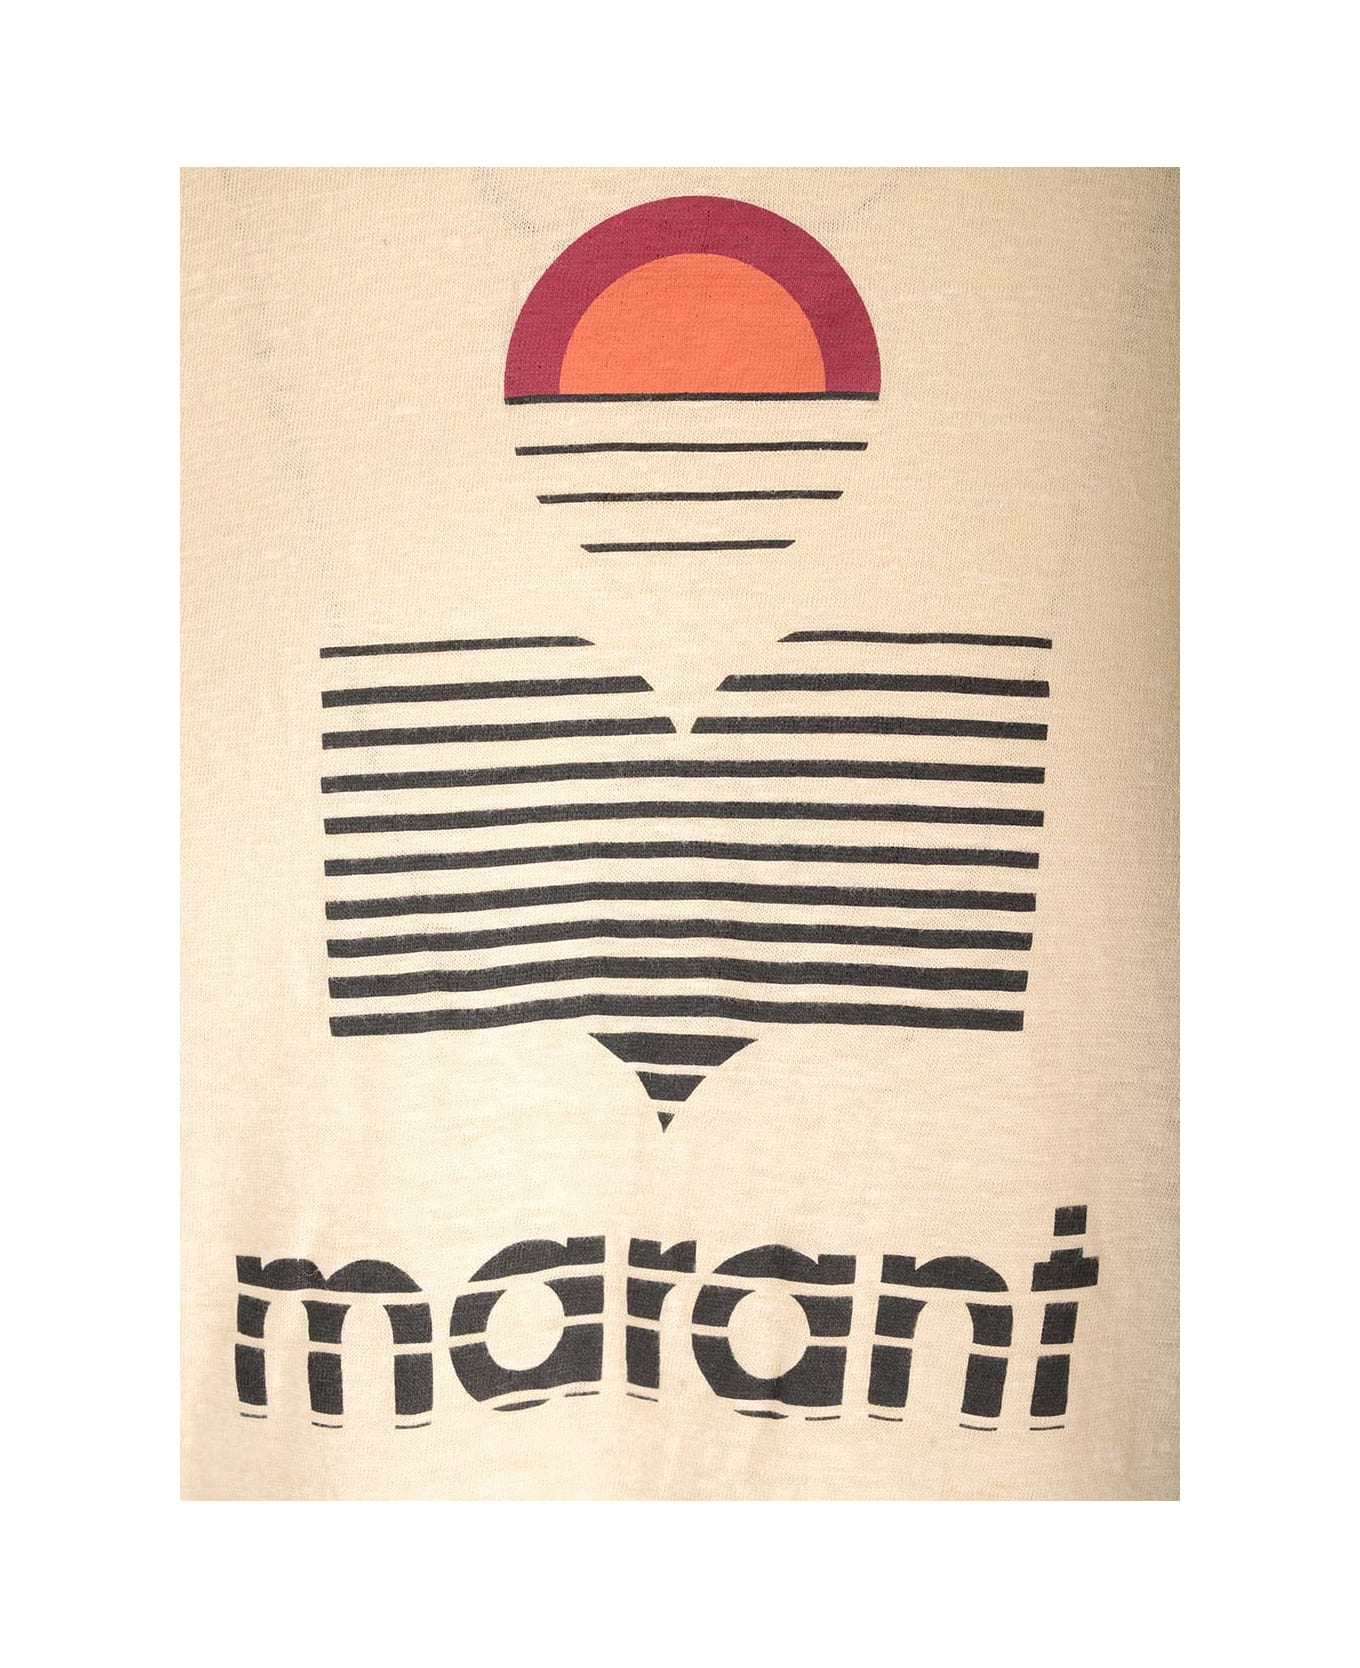 Isabel Marant 'karman' T-shirt - Beige シャツ